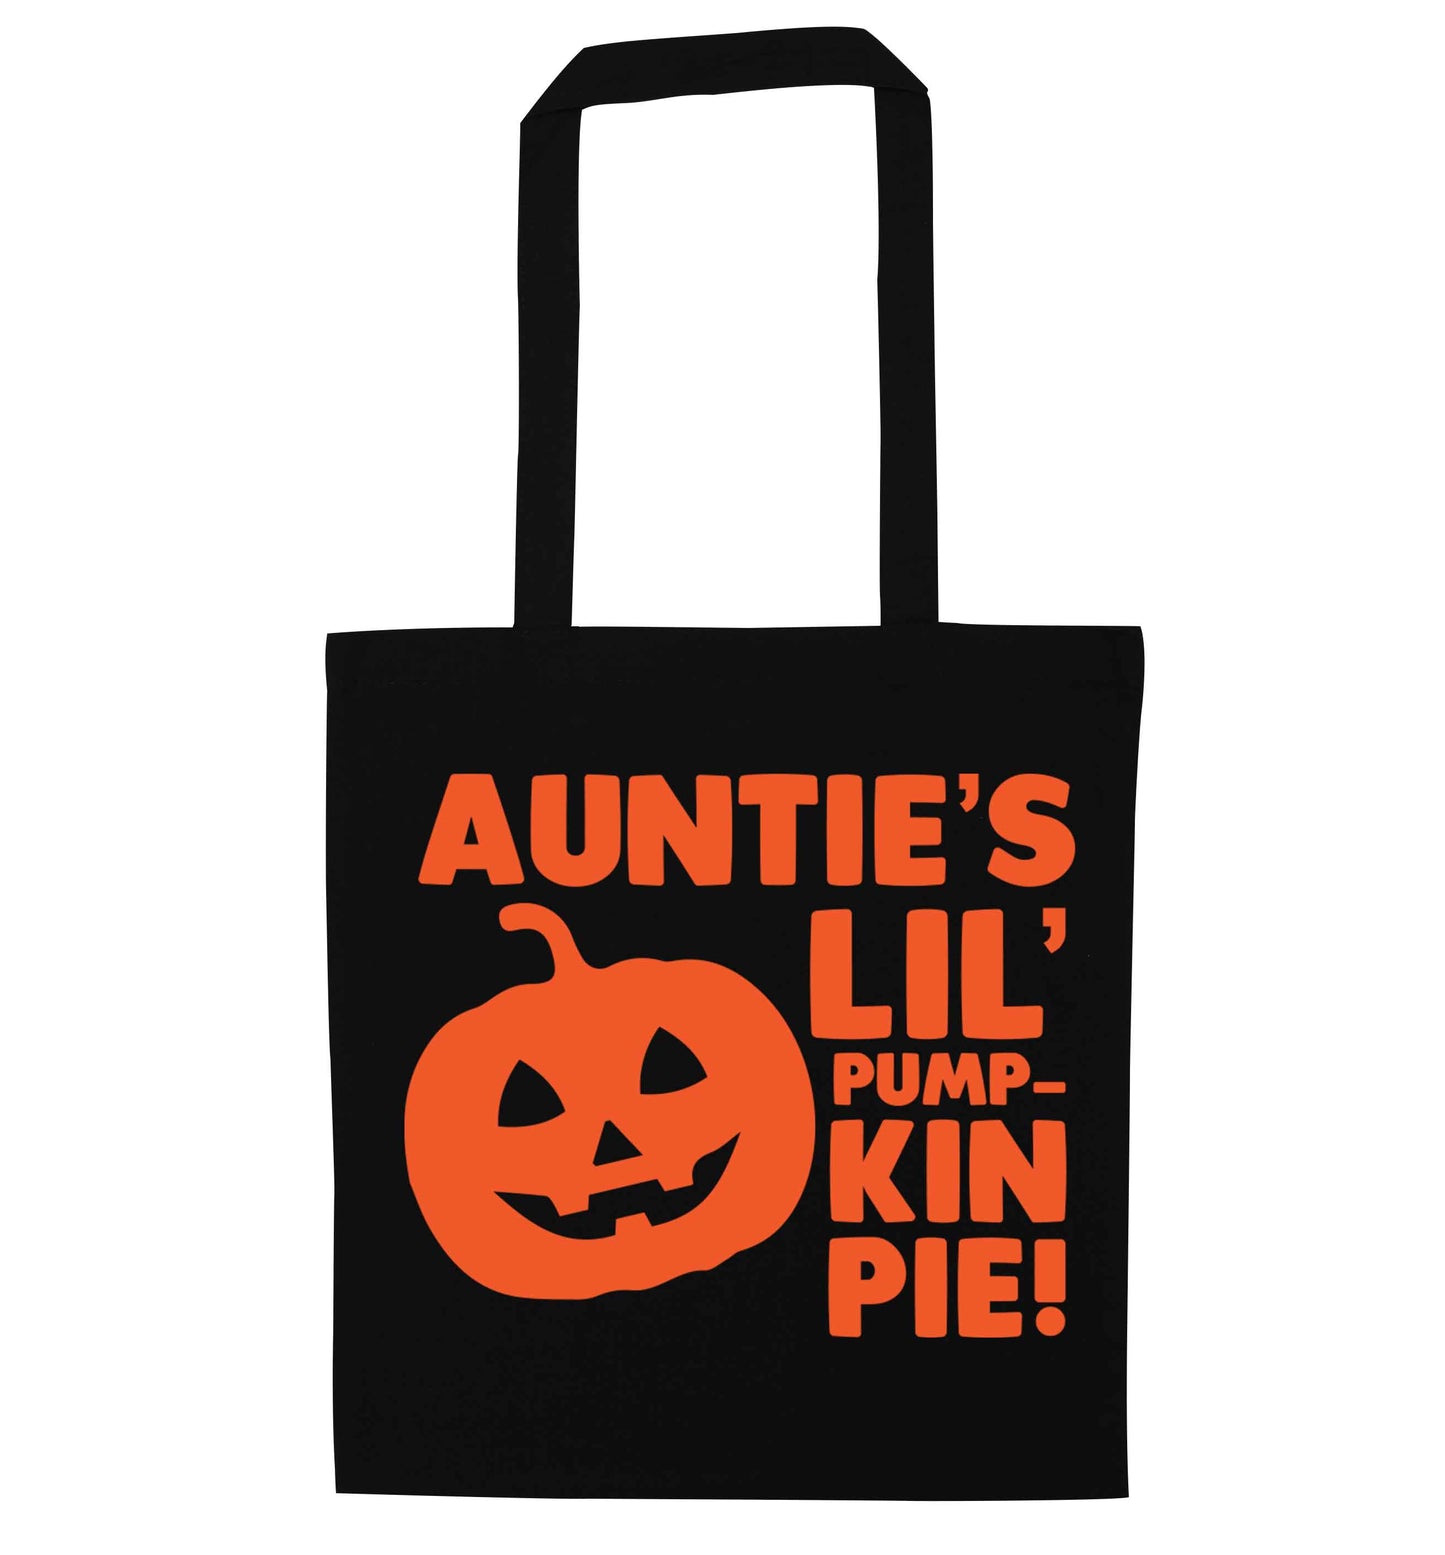 Auntie's lil' pumpkin pie black tote bag